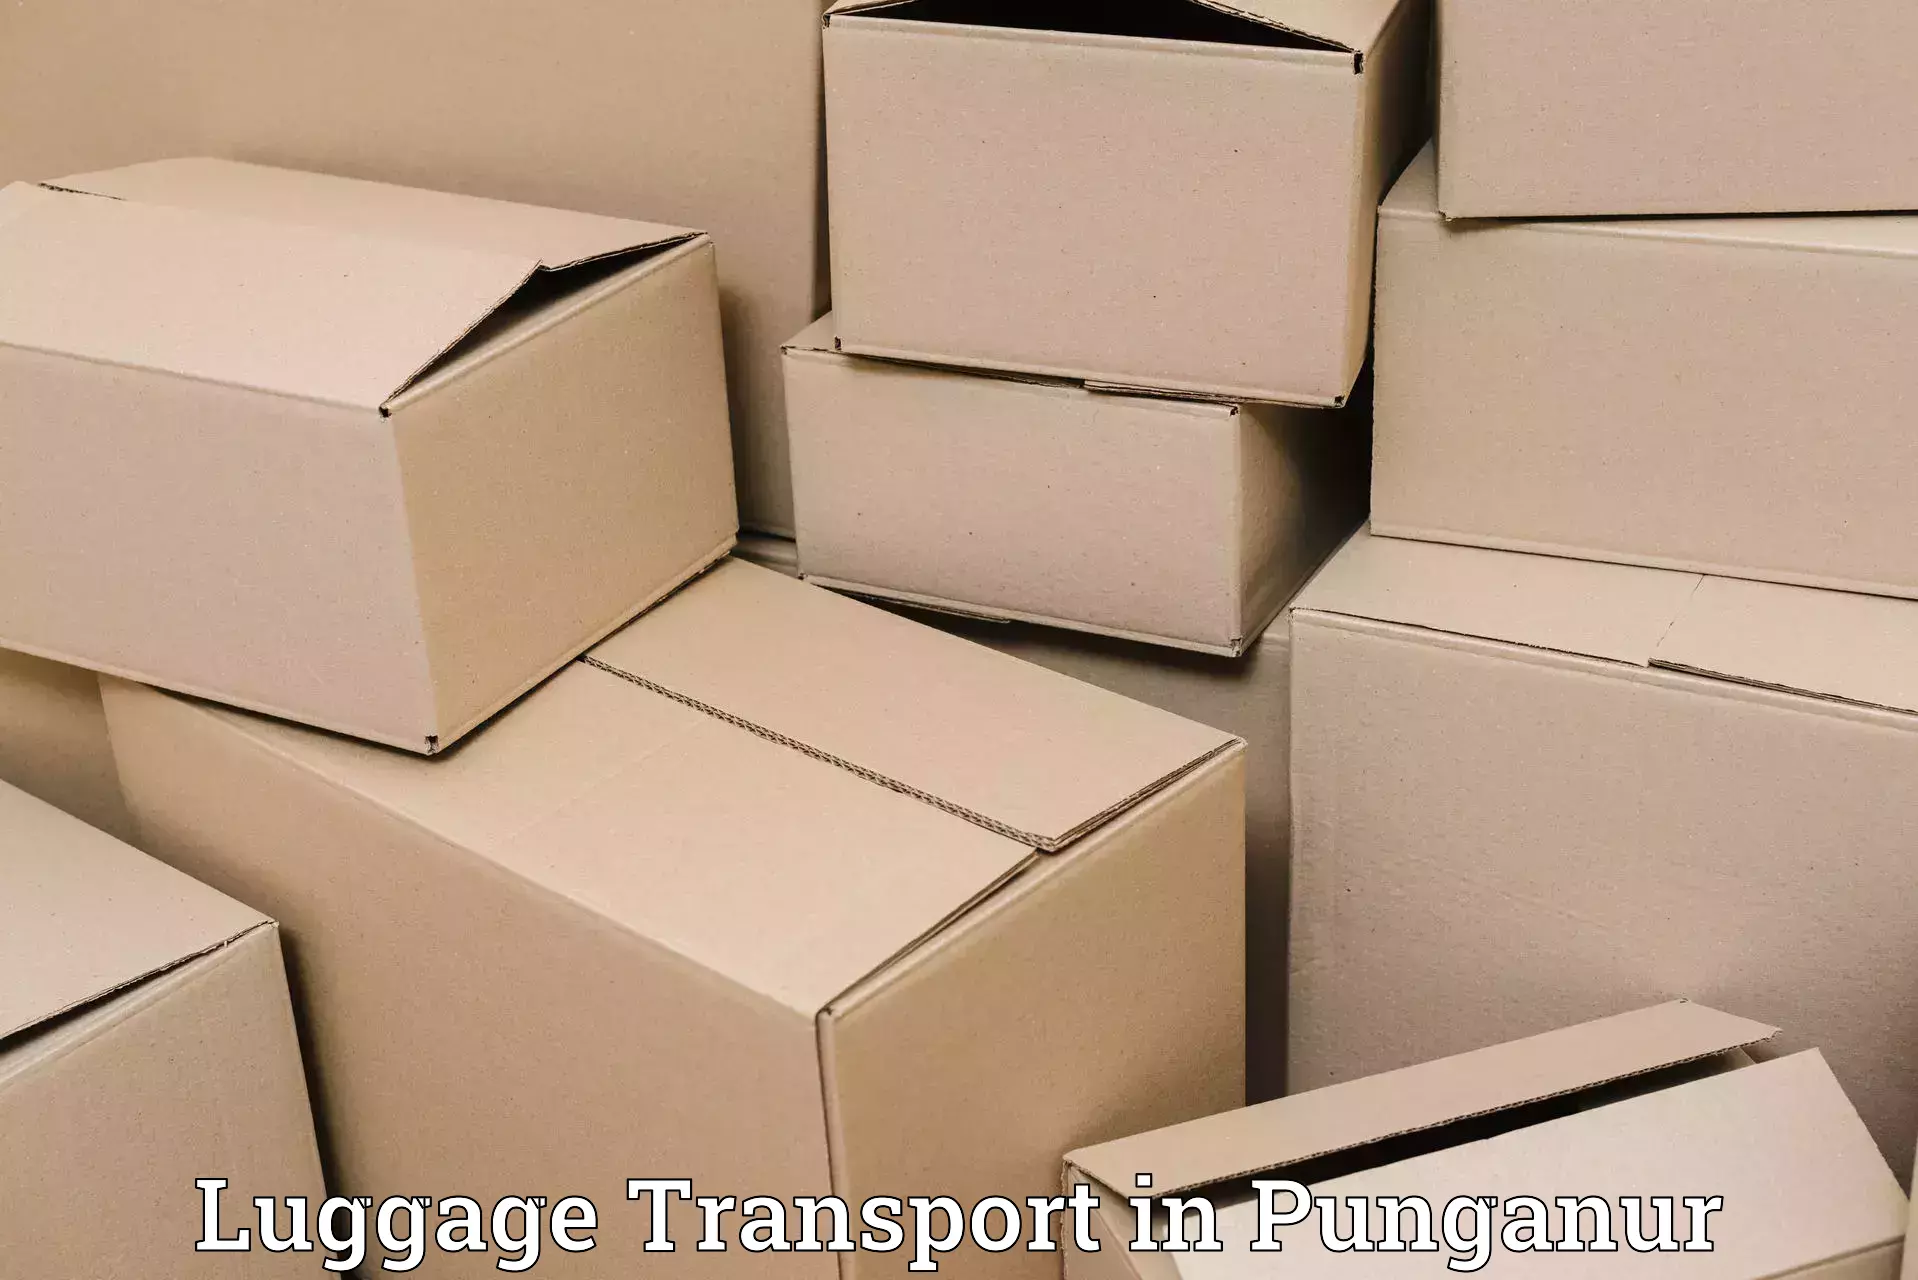 Multi-destination luggage transport in Punganur